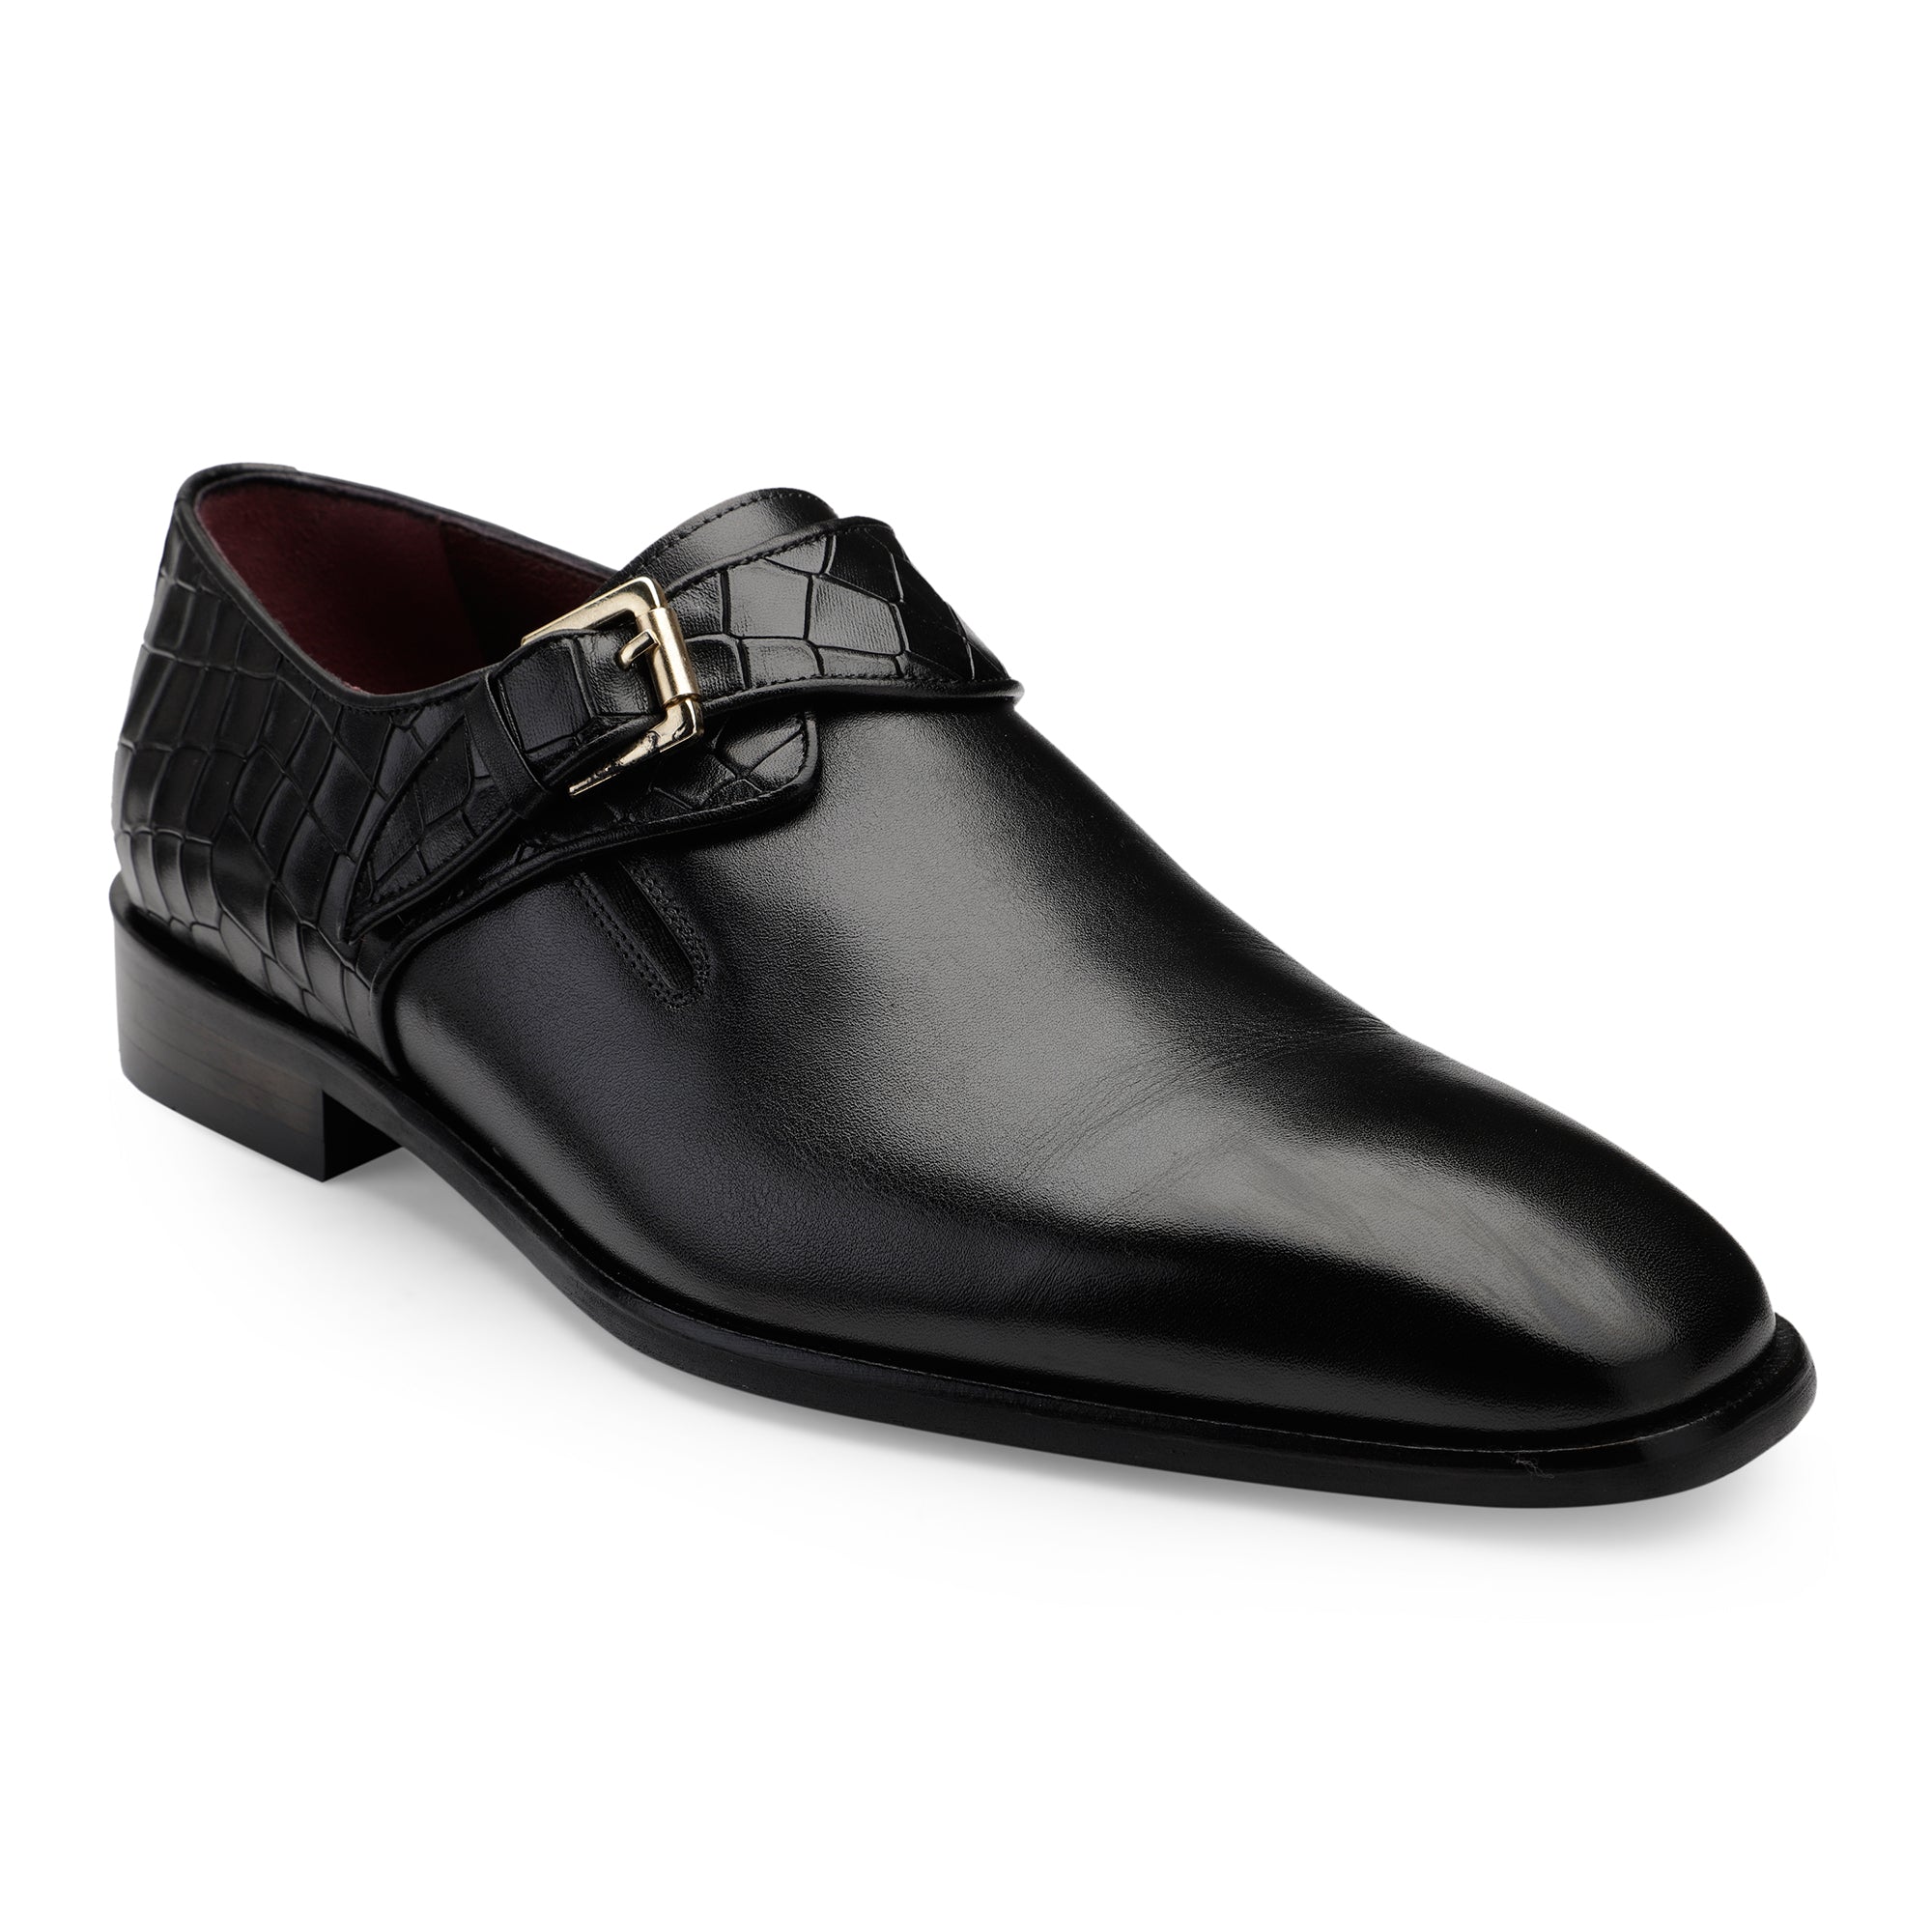 Buy premium quality leather formal shoes for men online| JOE SHU